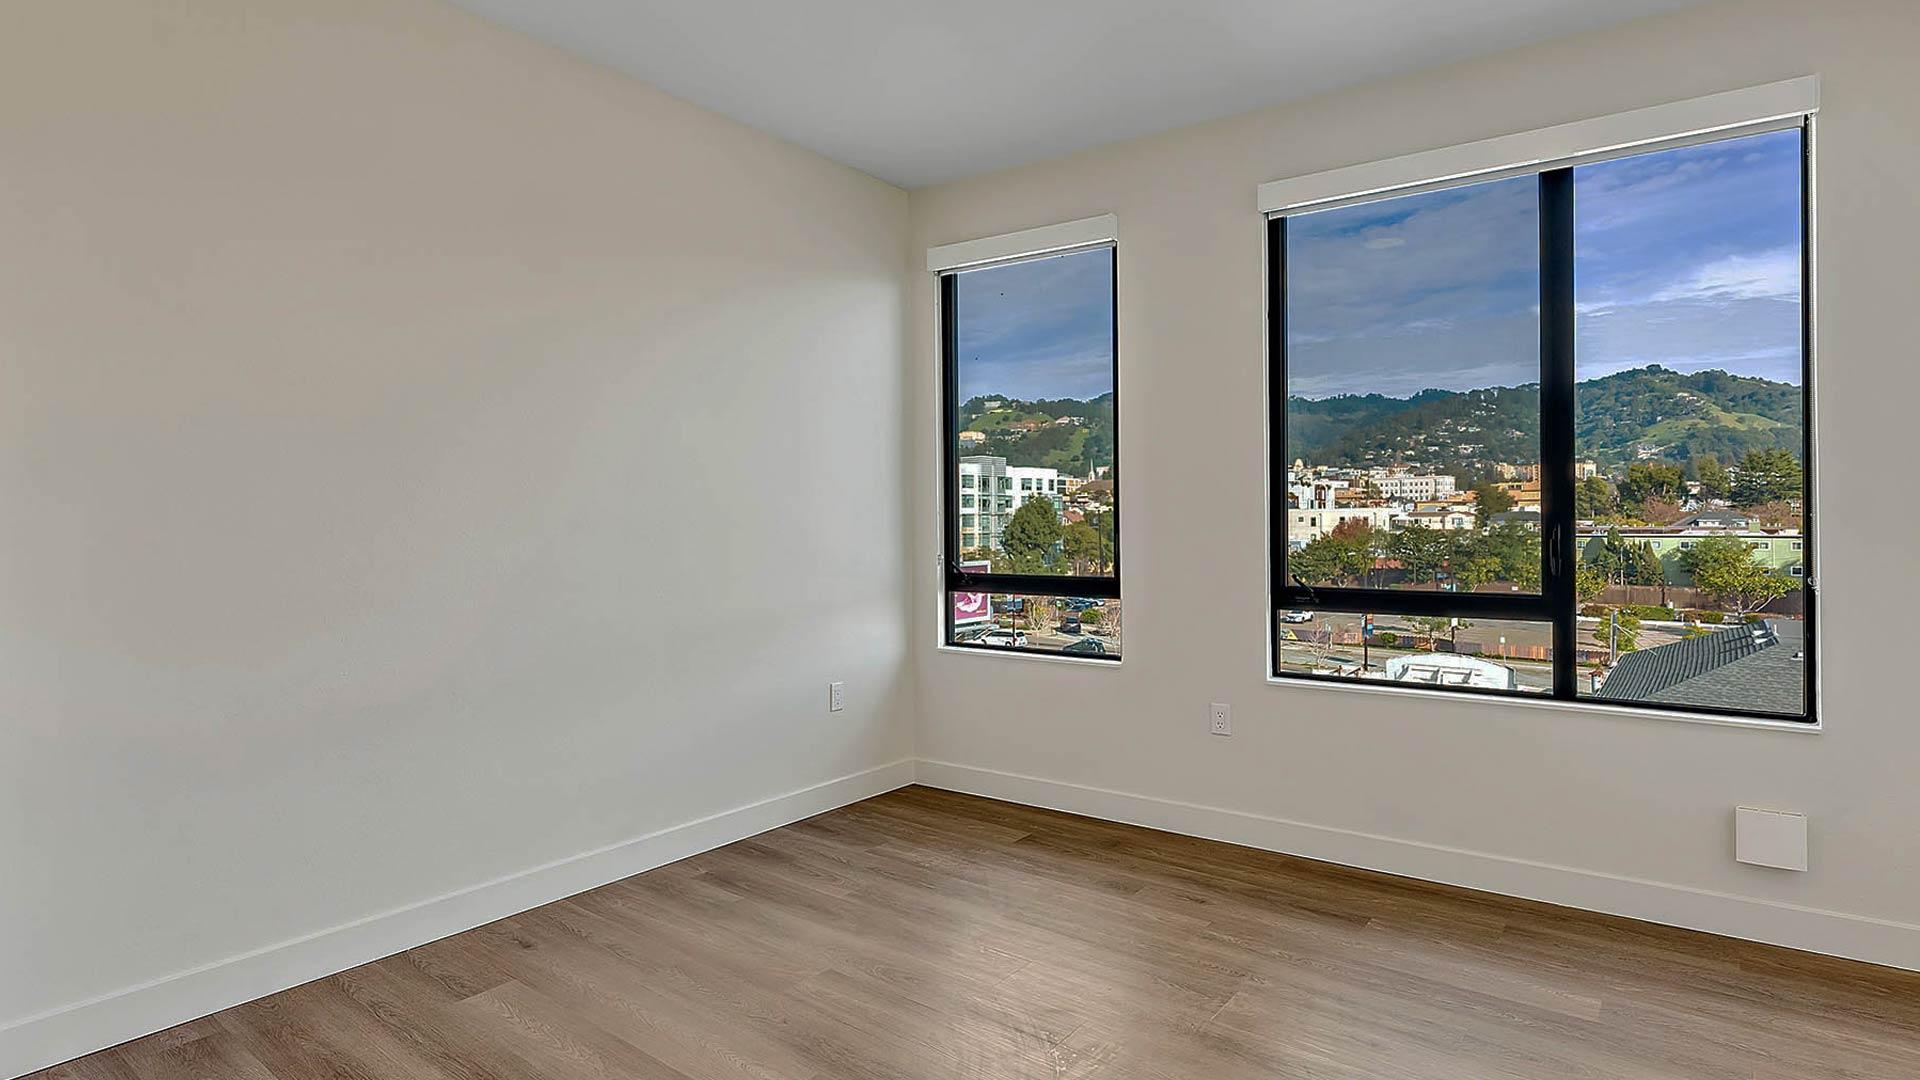 Blake apartments c7 floorplan window view 2